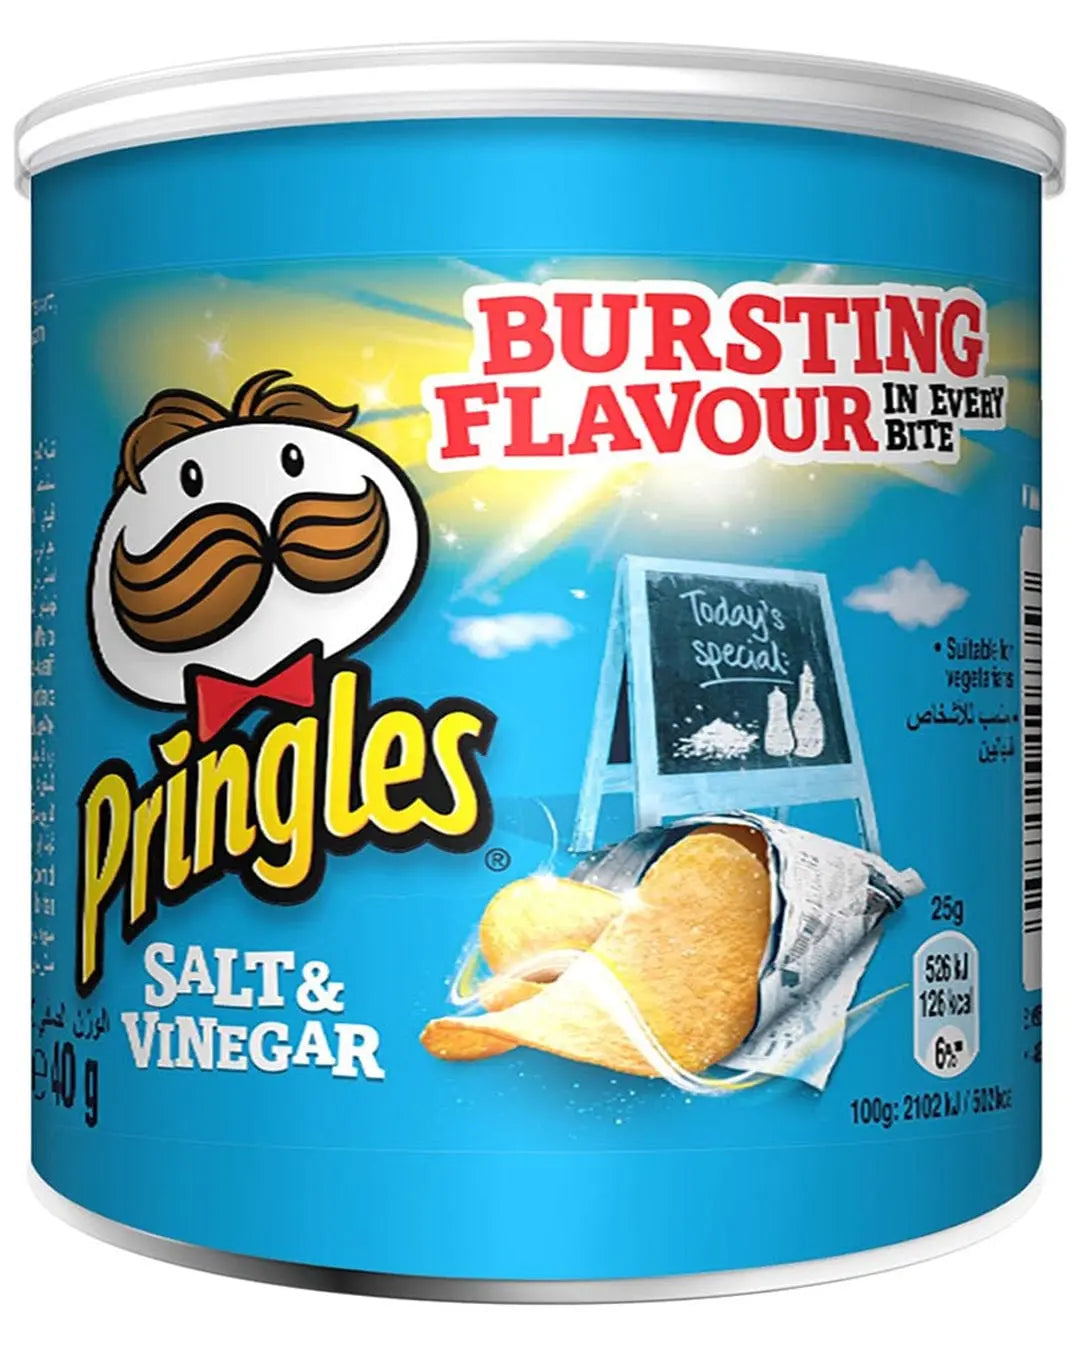 Pringles Salt & Vinegar Crisps Tub, 40 g Snacks